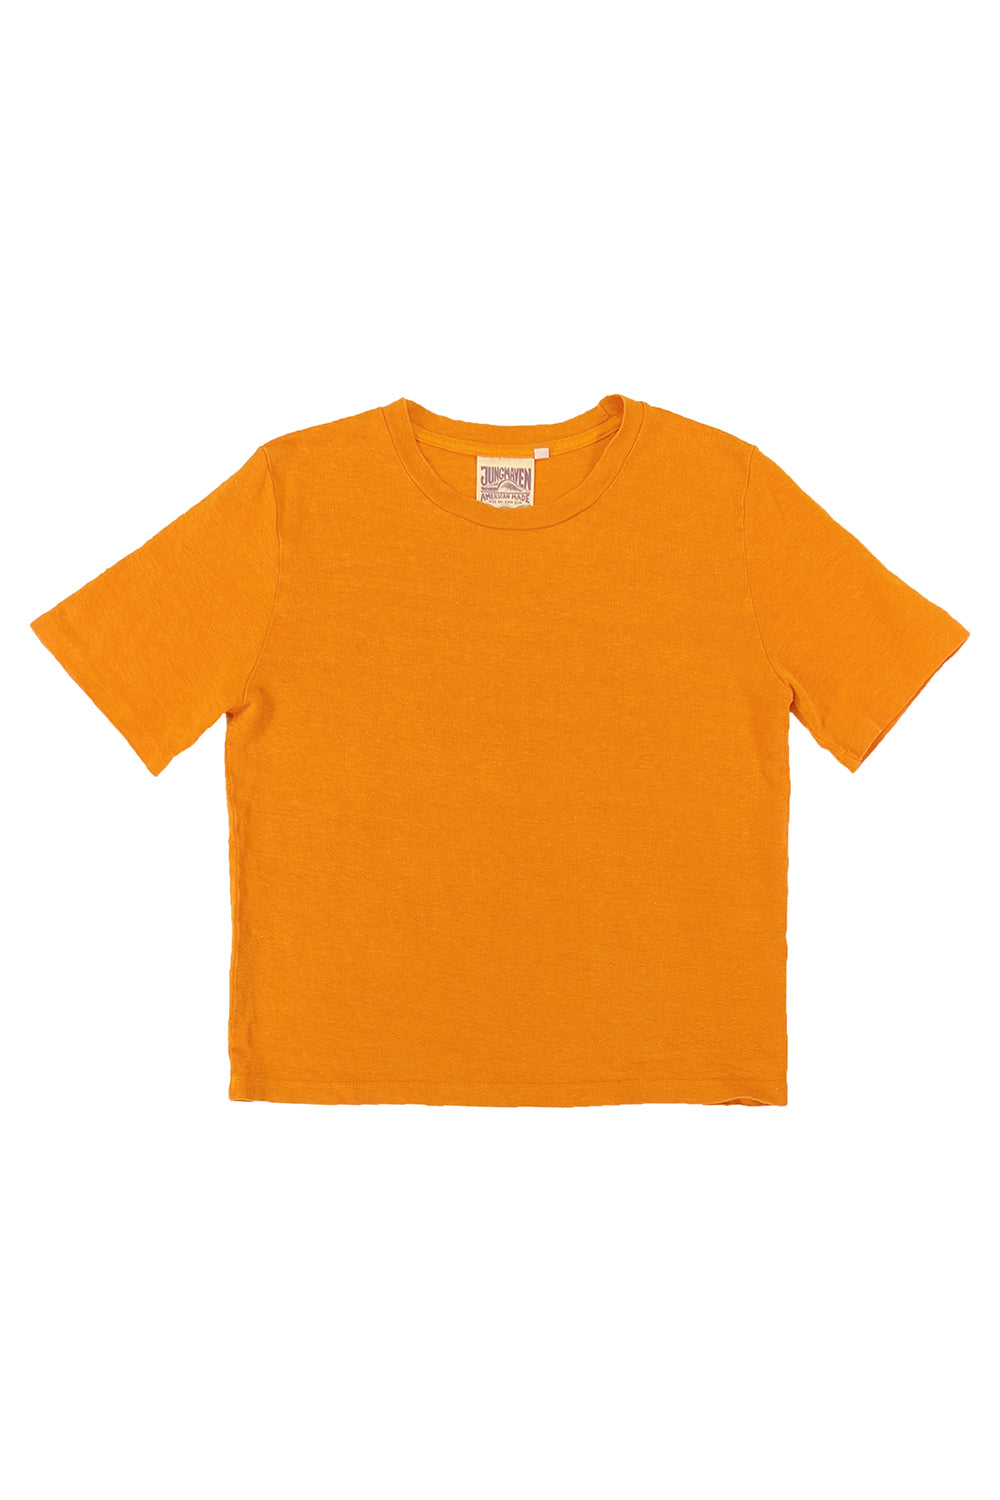 Dakota - 100% Hemp Cropped Tee | Jungmaven Hemp Clothing & Accessories / Color: Mango Mojito